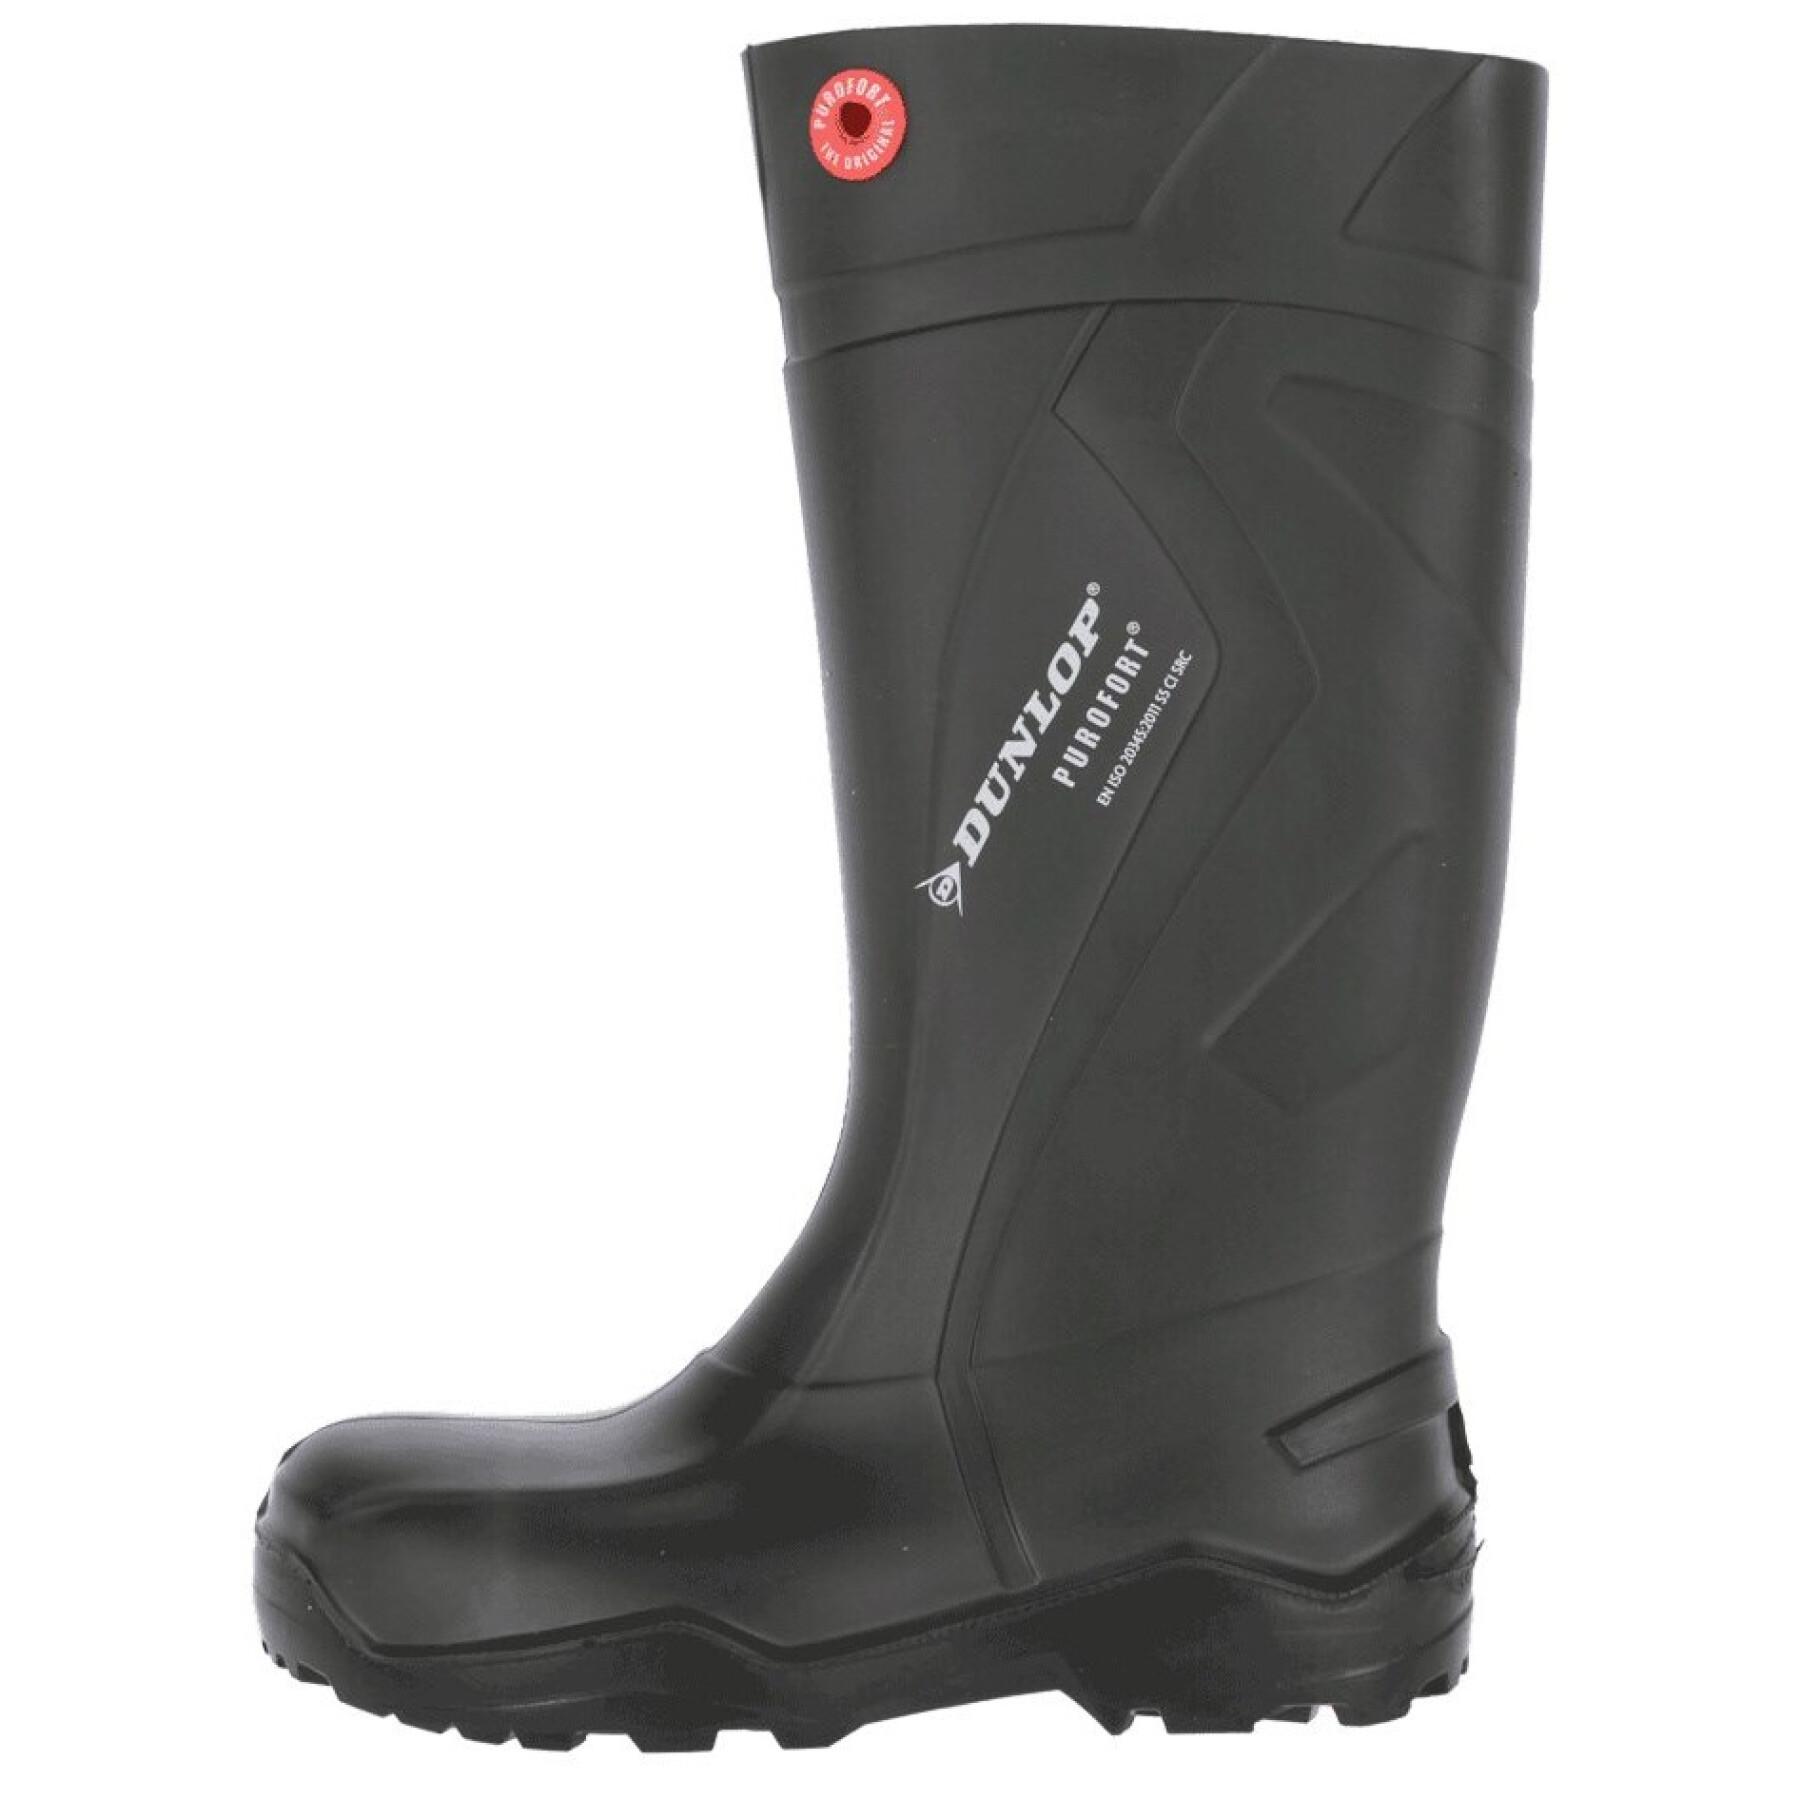 Safety boots Dunlop Purofort + S5